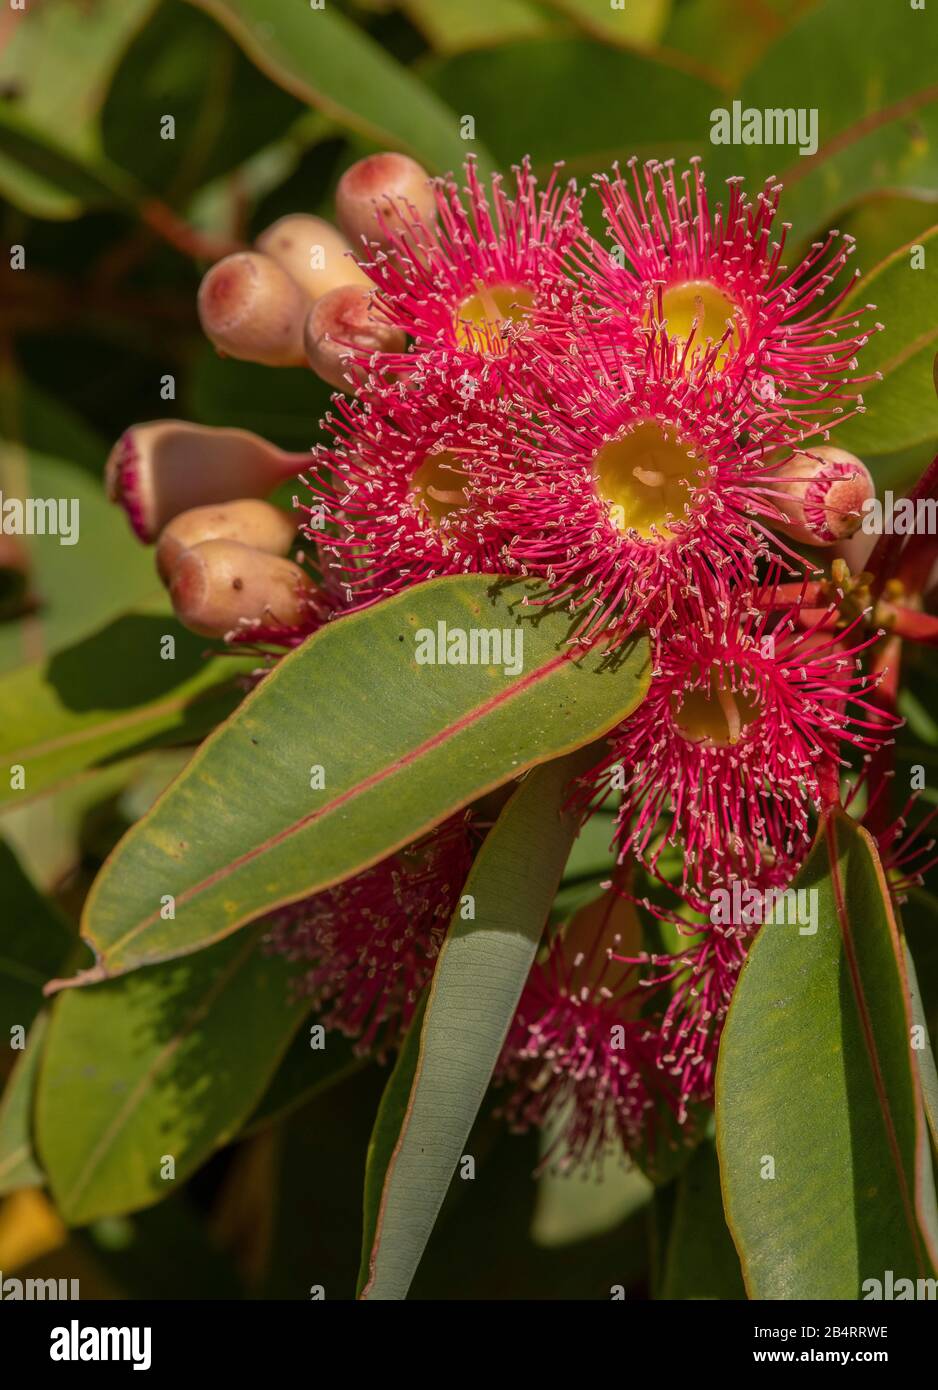 Rot blühender Gummi, Corymbia ficifolia, in Blüte. Endemisch im Südwesten Australiens. Stockfoto